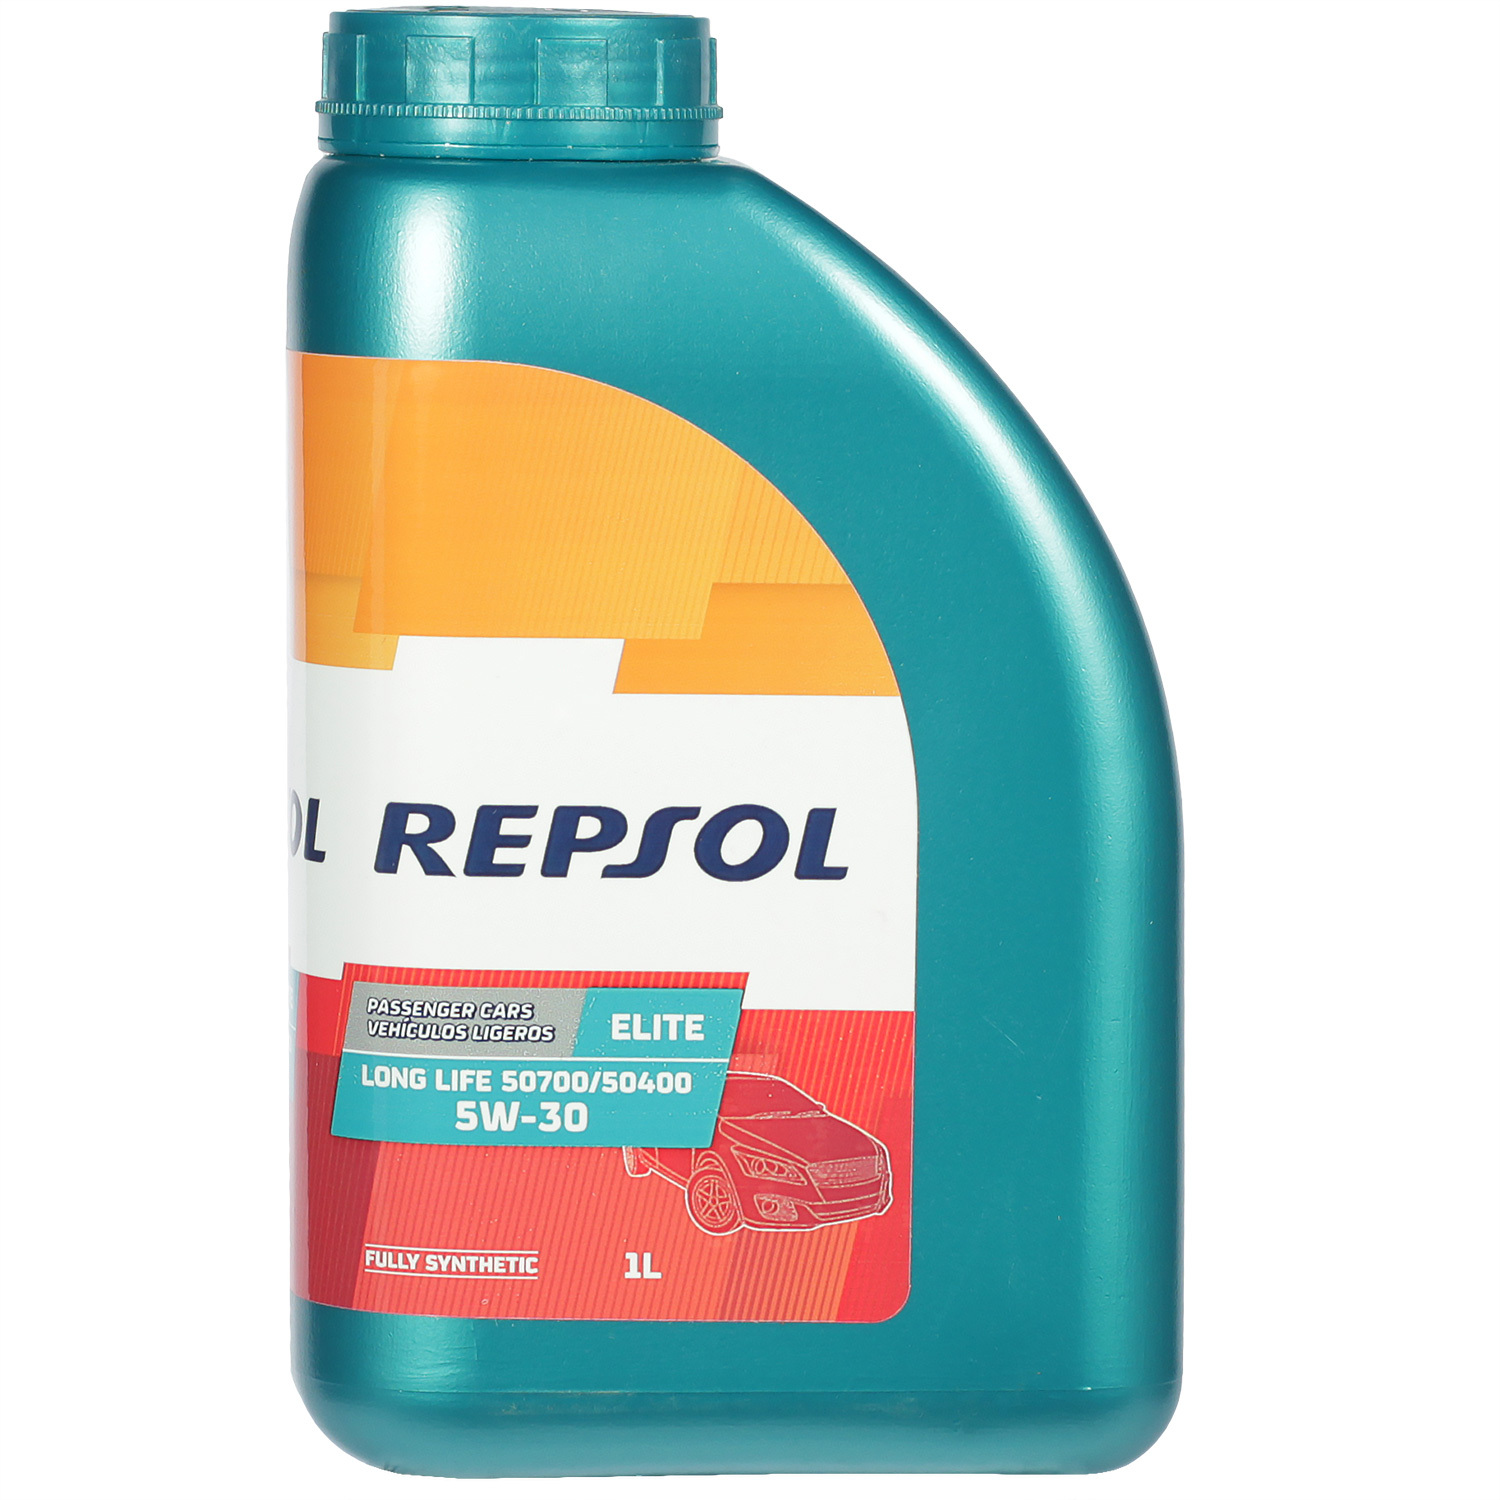 Repsol Моторное масло Repsol Elite LONG LIFE 50700/50400 5W-30, 1 л масло моторное repsol 5 30 elite long life 50700 50400 rp синтетическое 4 л